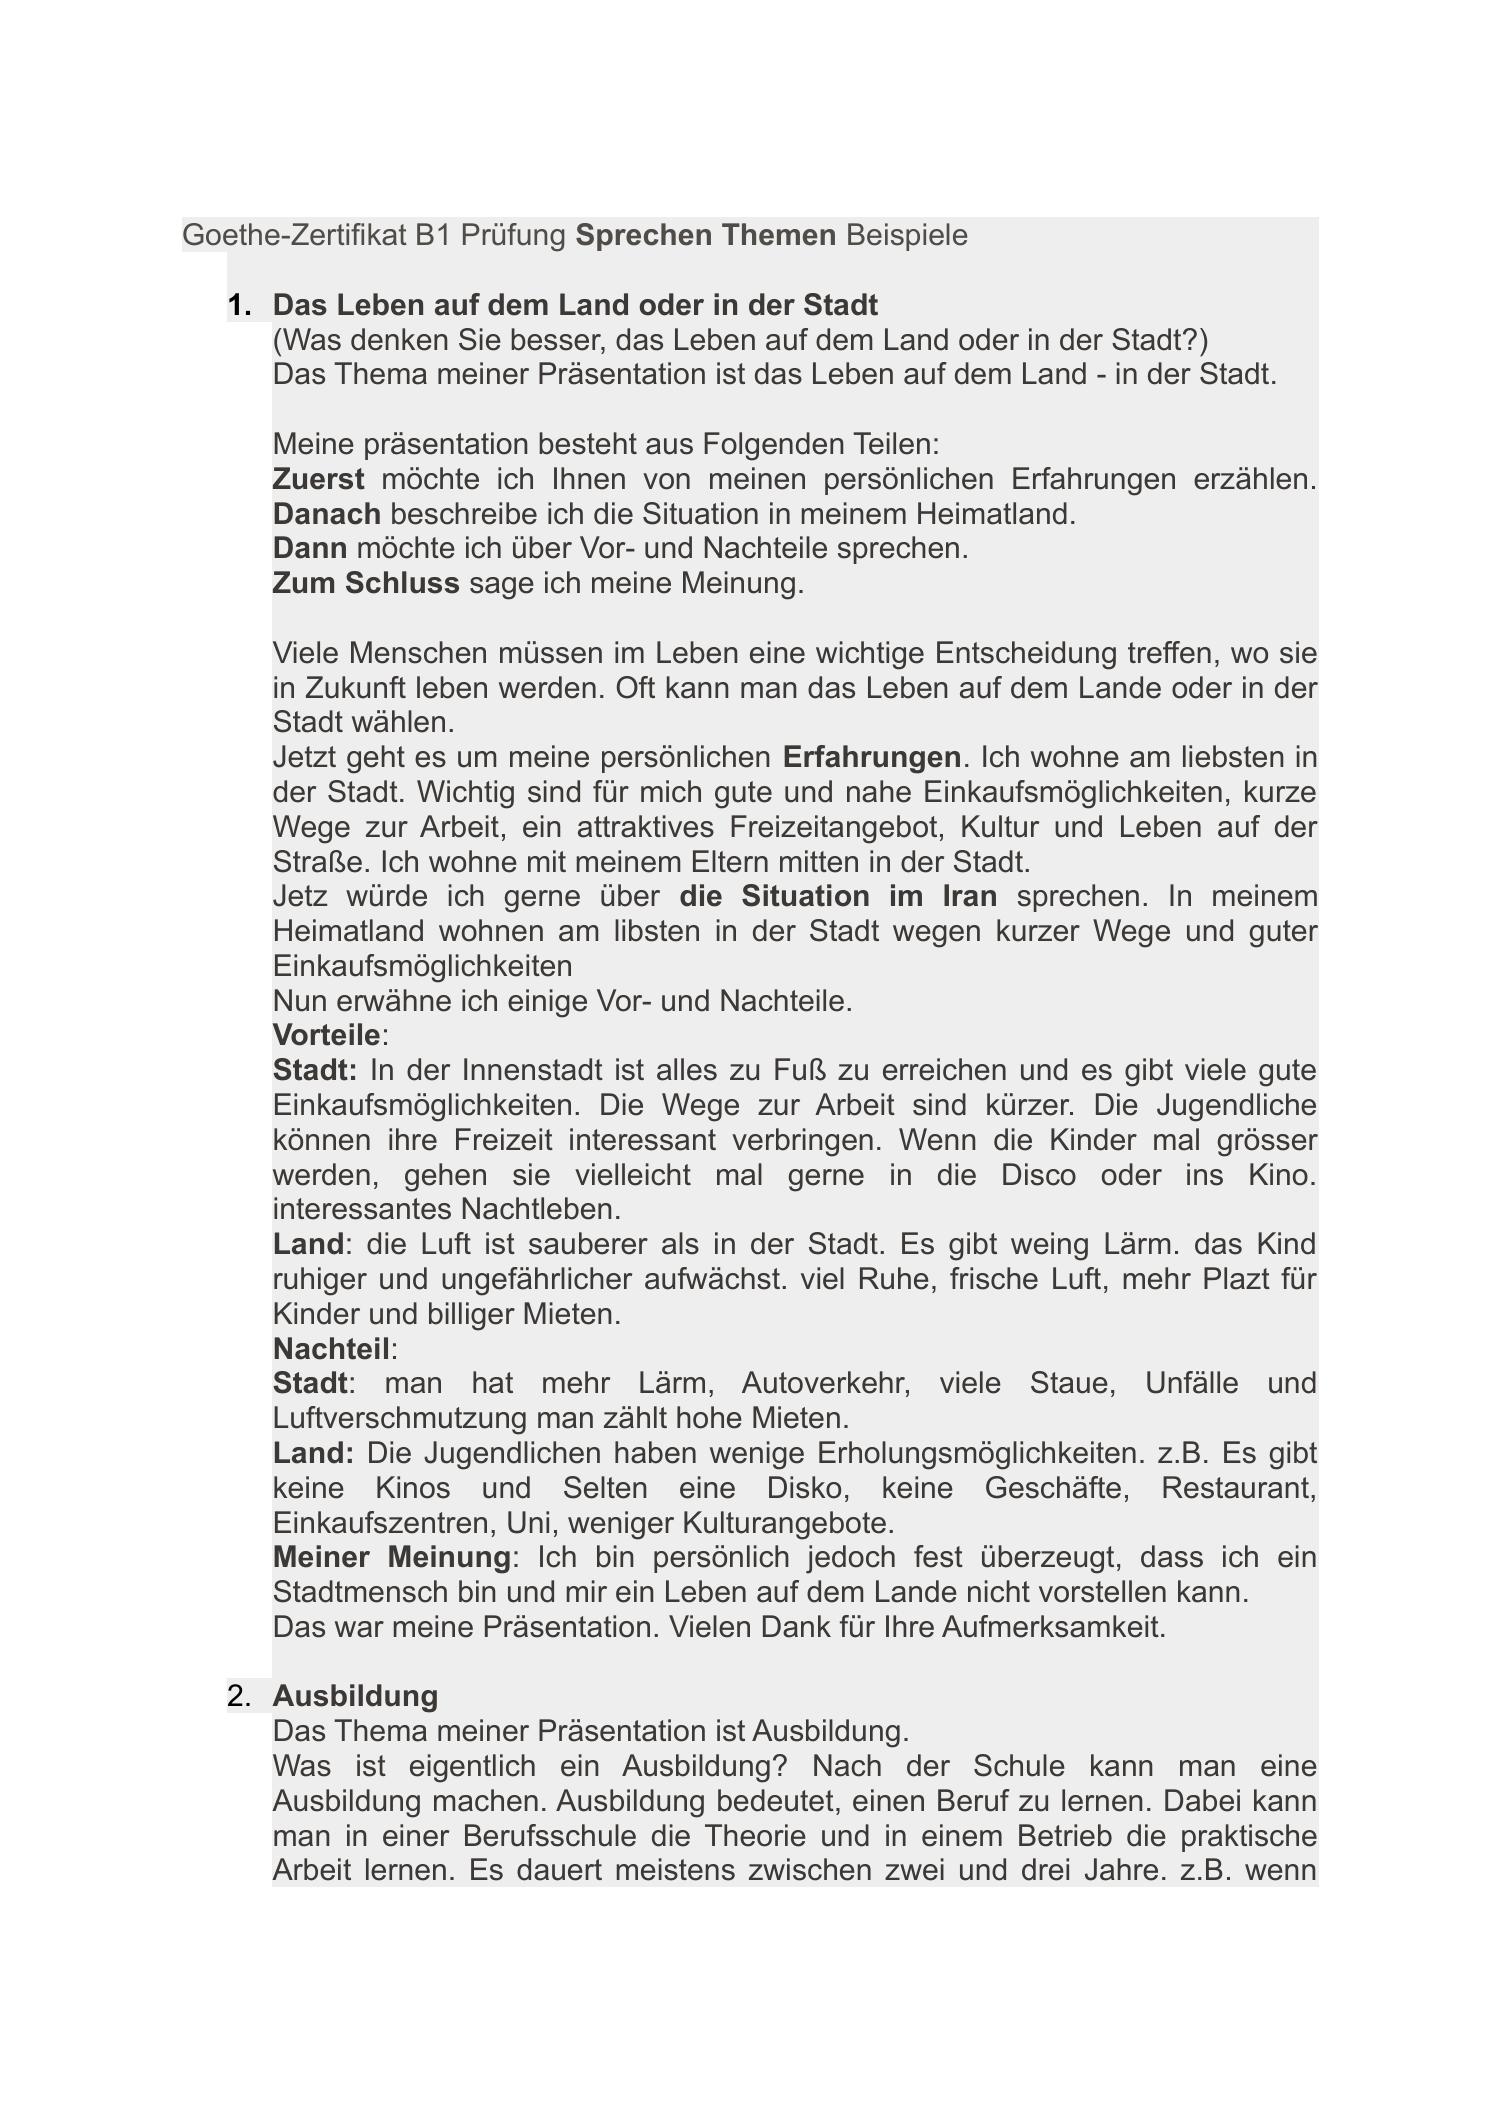 Goethe-B1-Sprechen-Themen.pdf | DocDroid